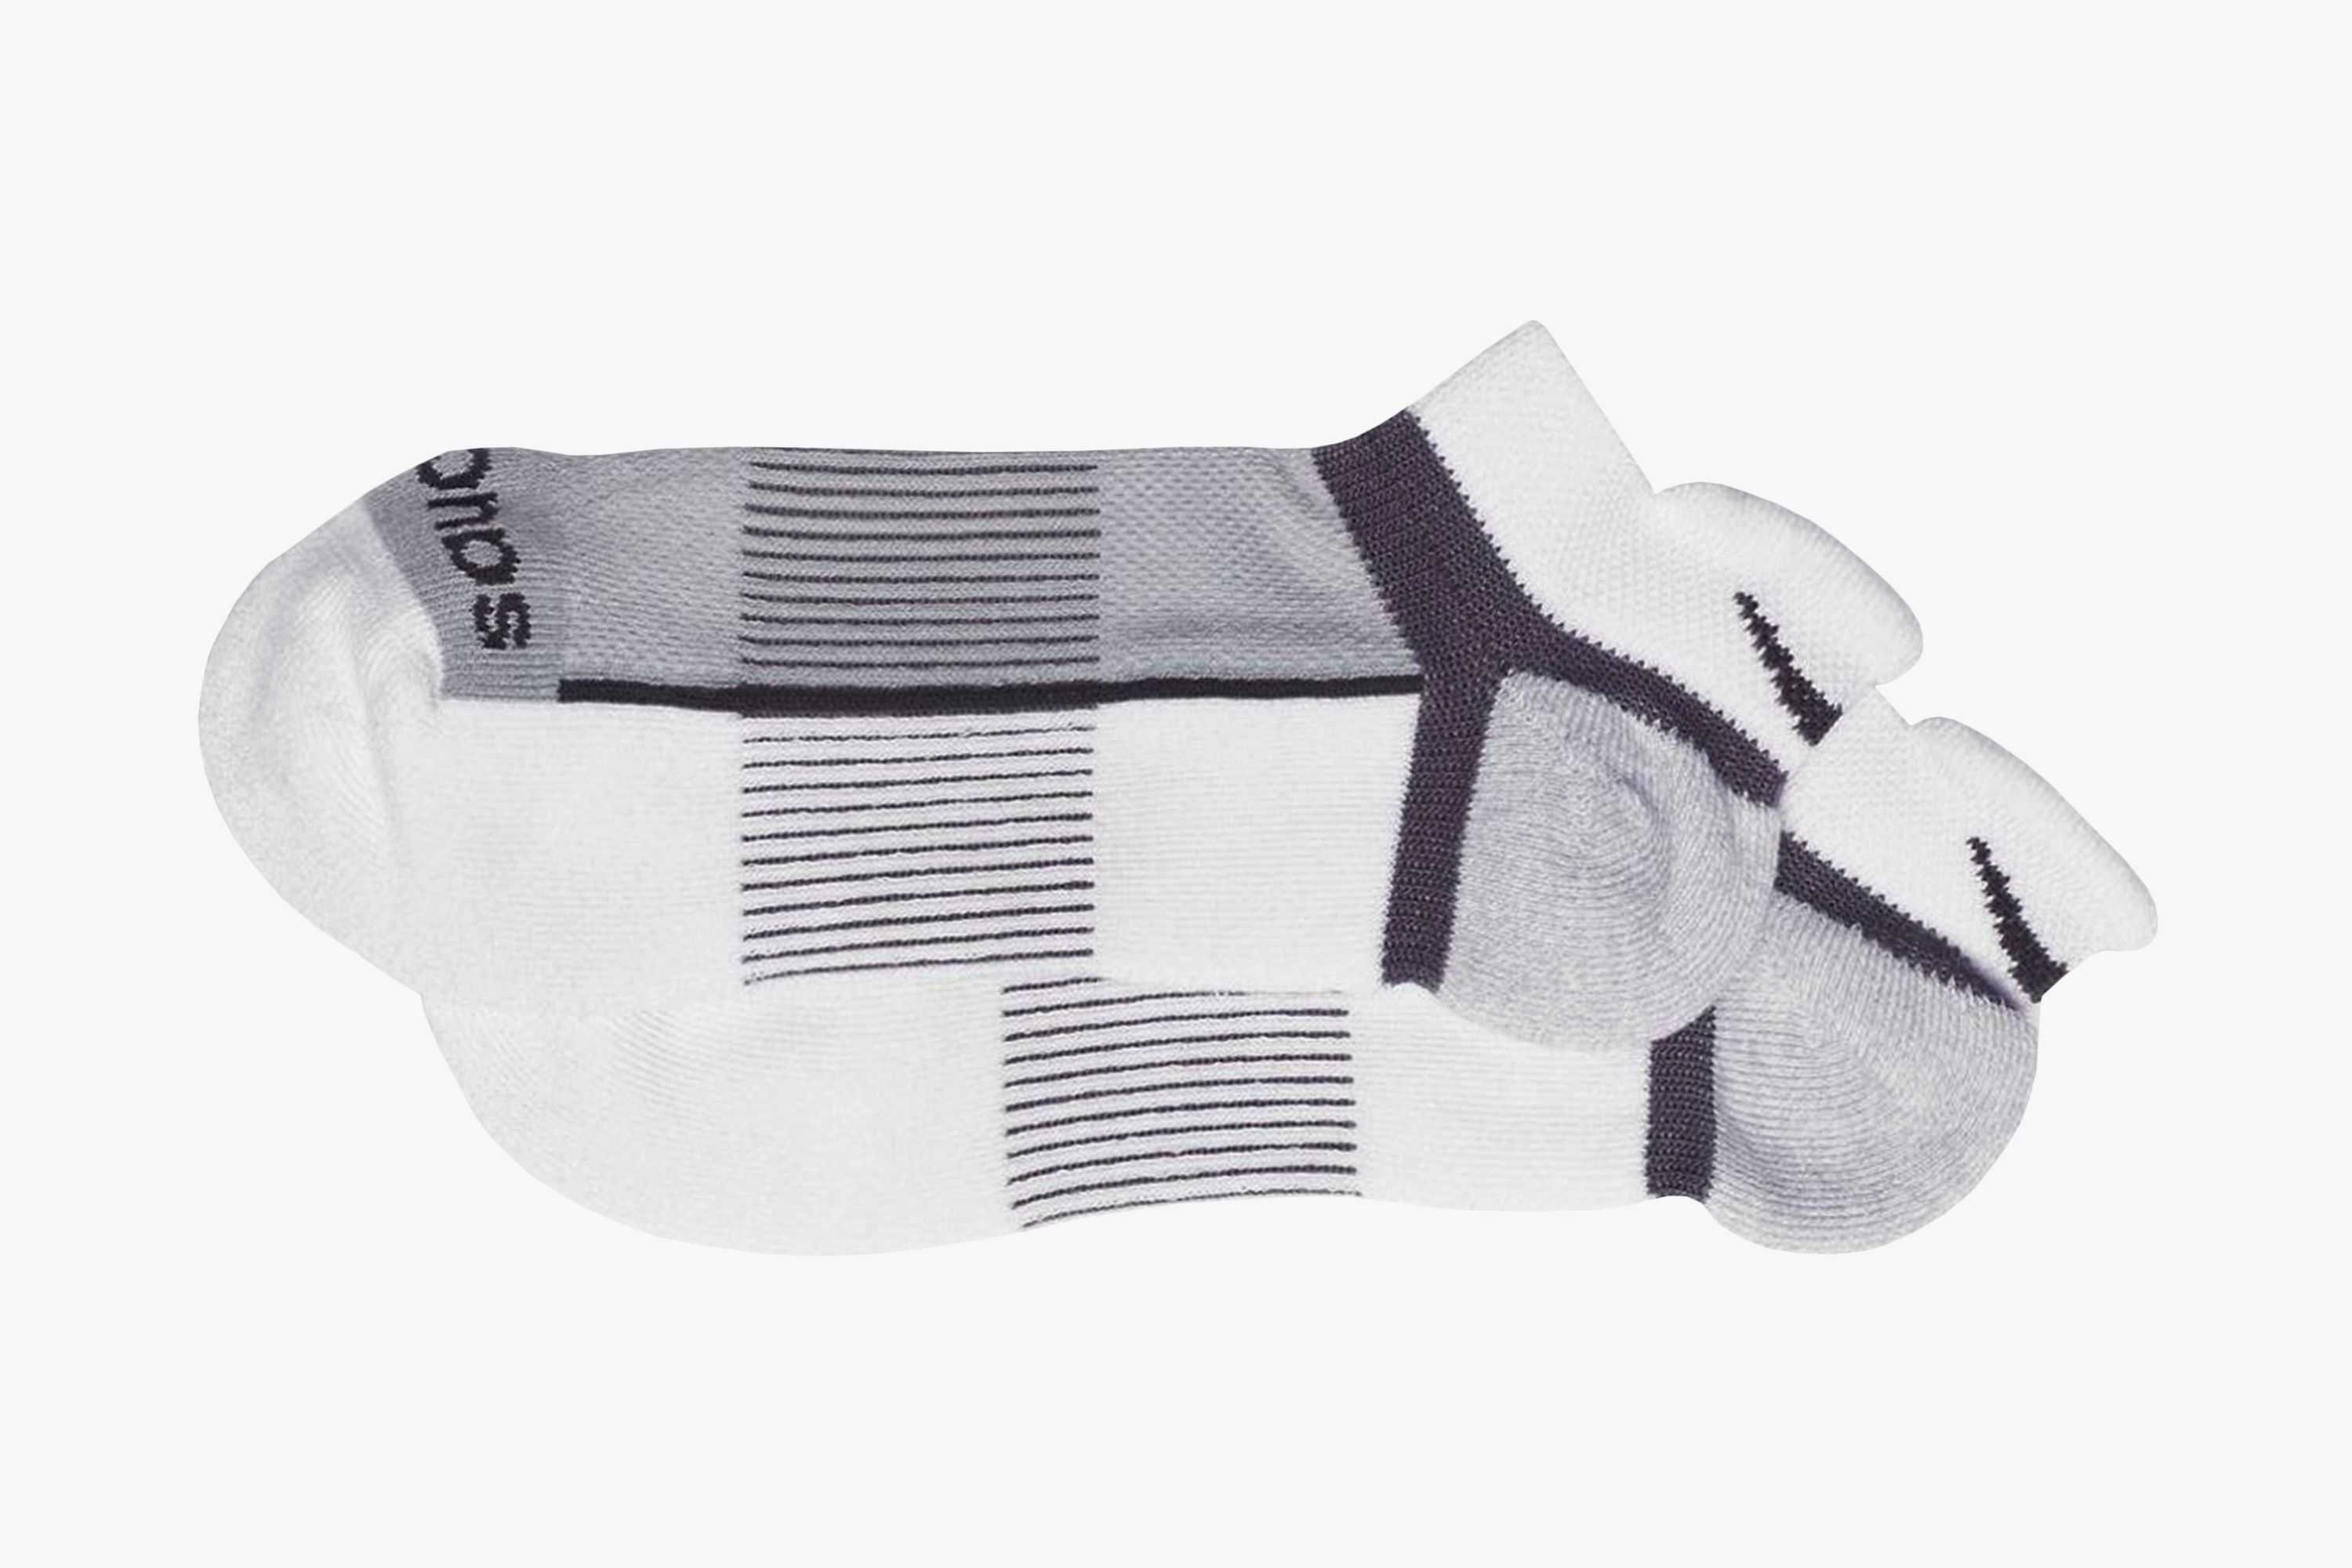 saucony socks review